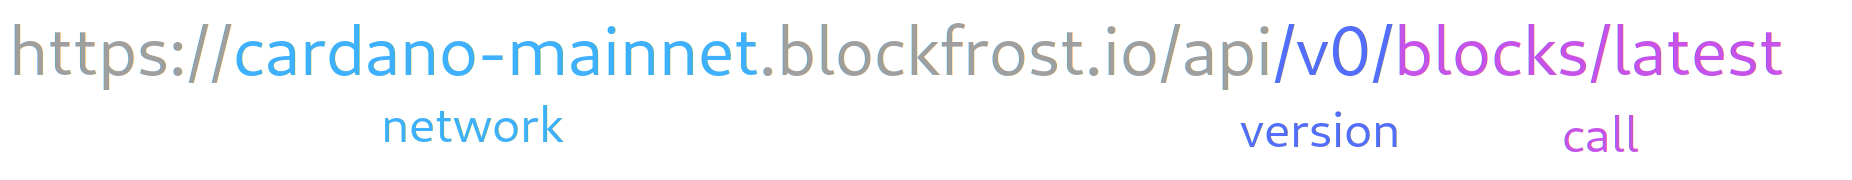 Blockfrost endpoint